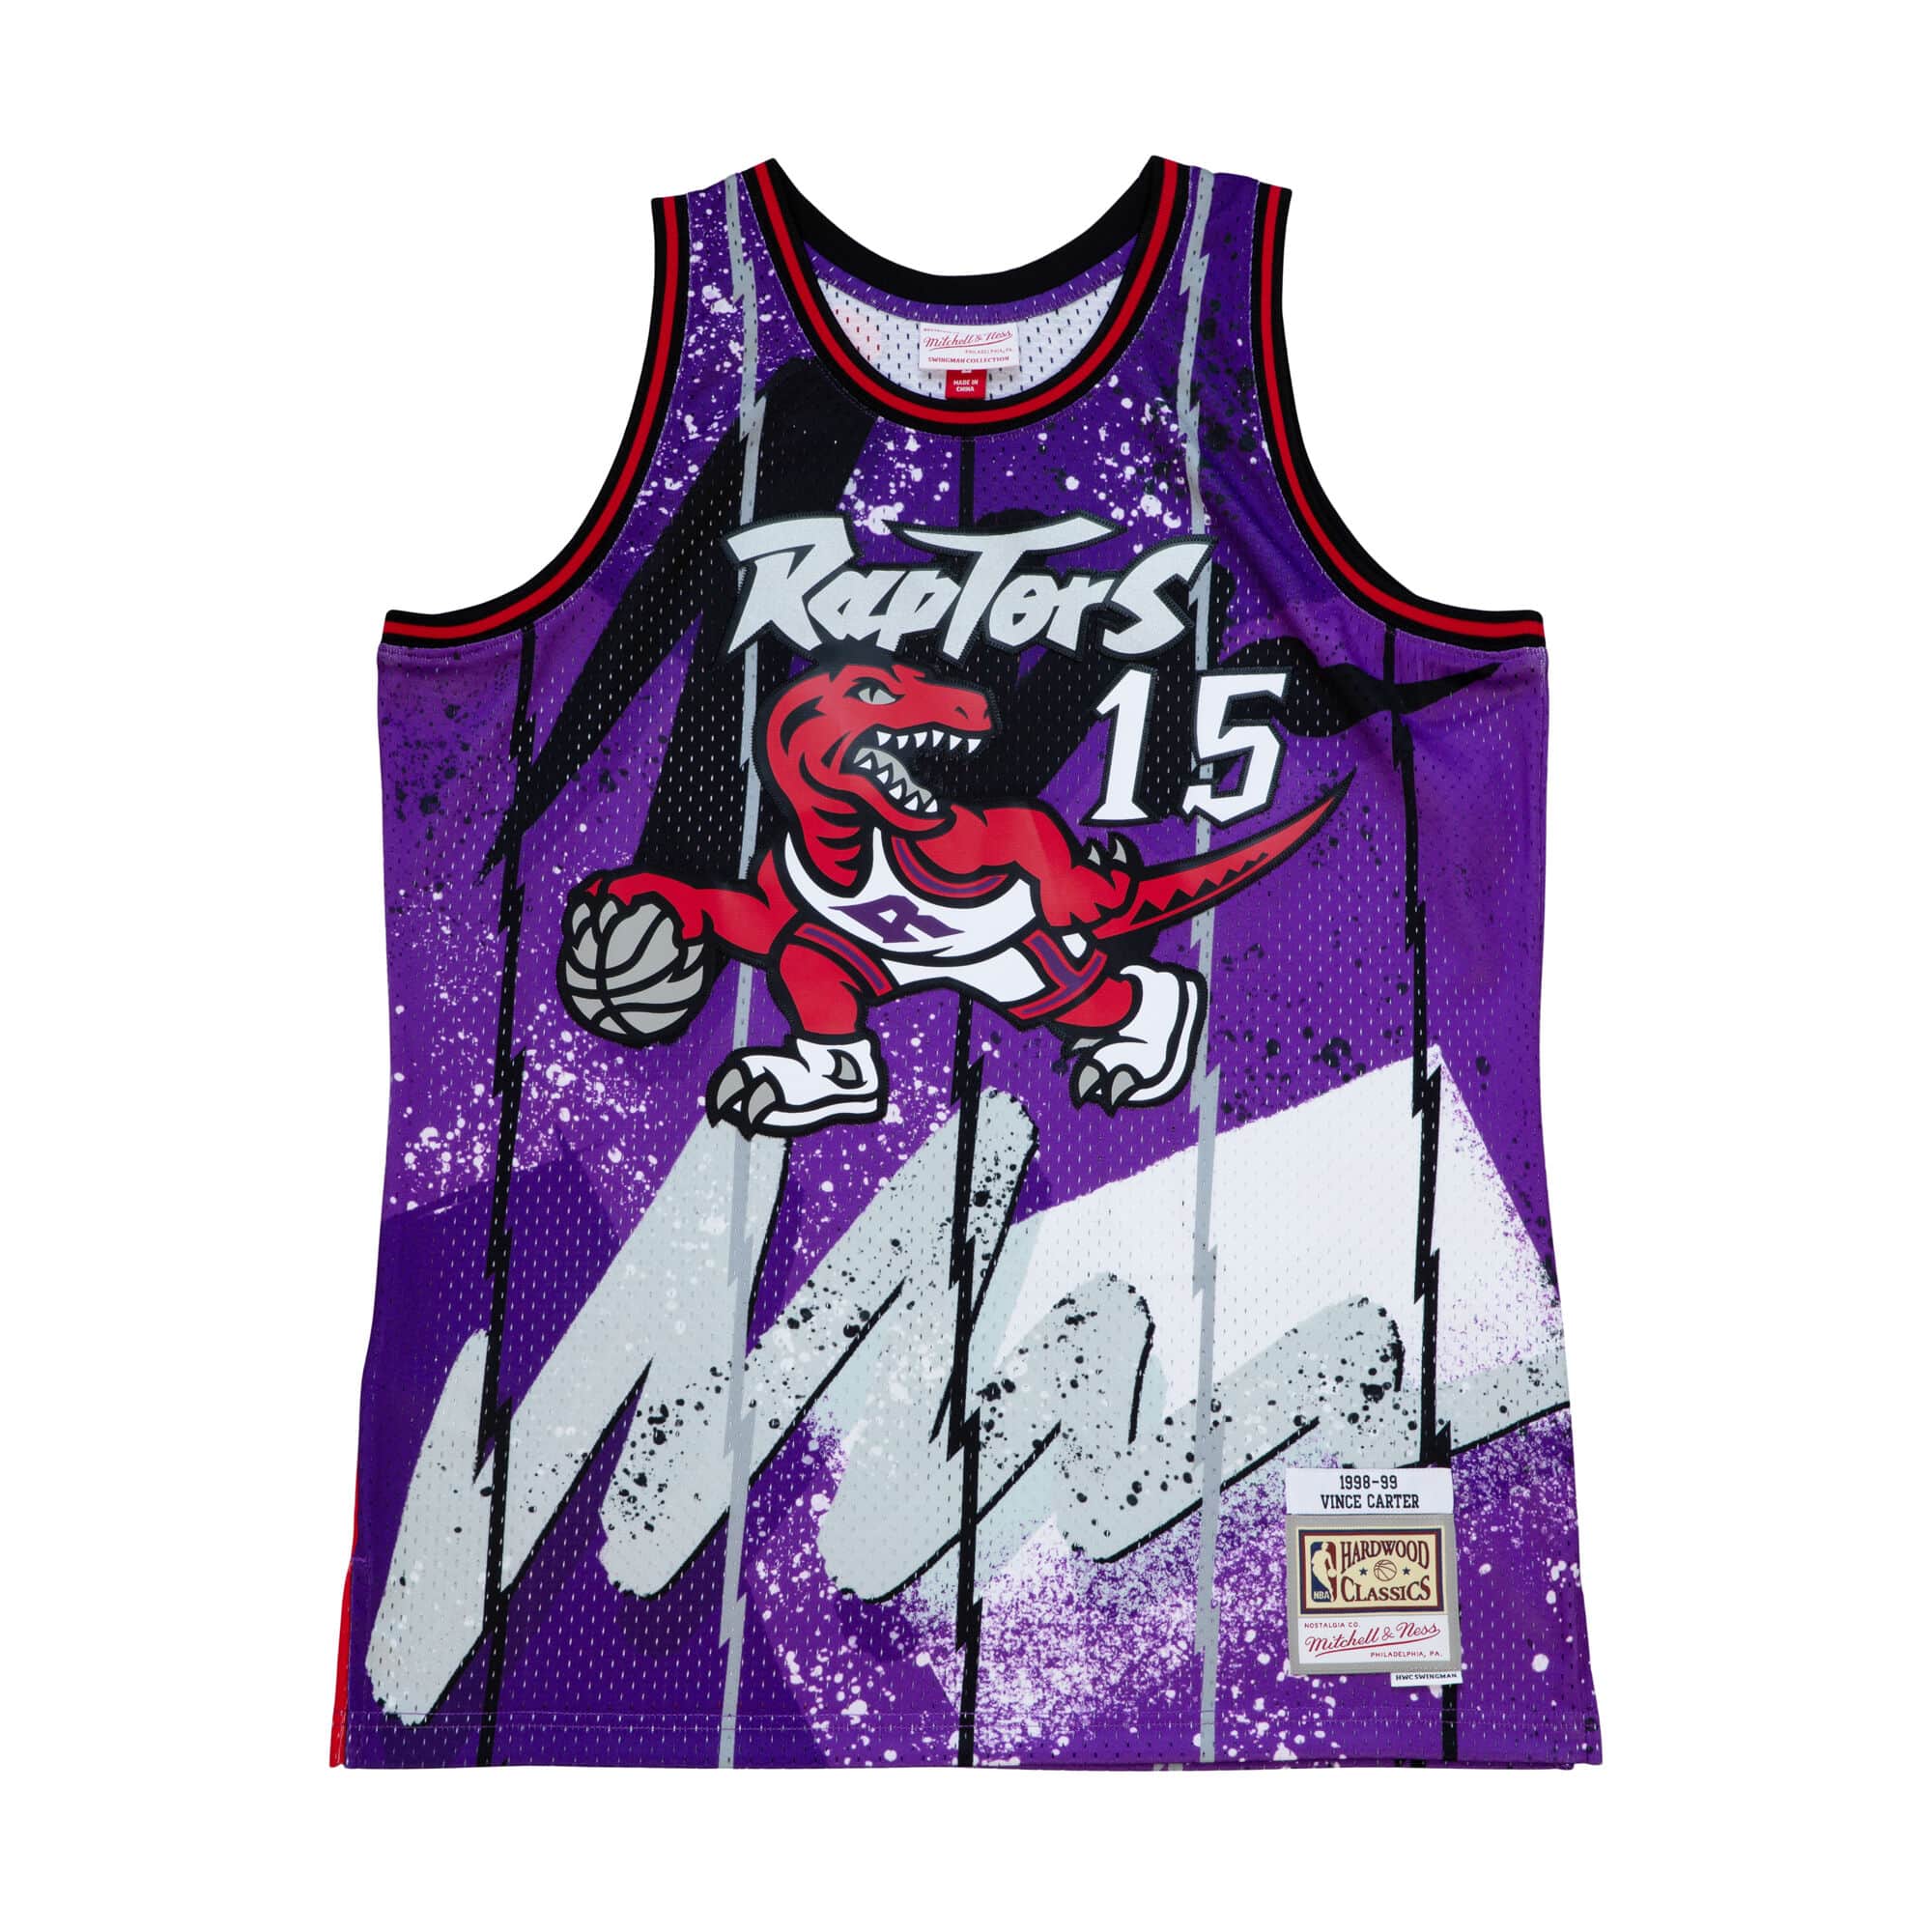 Toronto Raptors 1998-99 Vince Carter Mitchell & Ness Swingman Jersey Purple